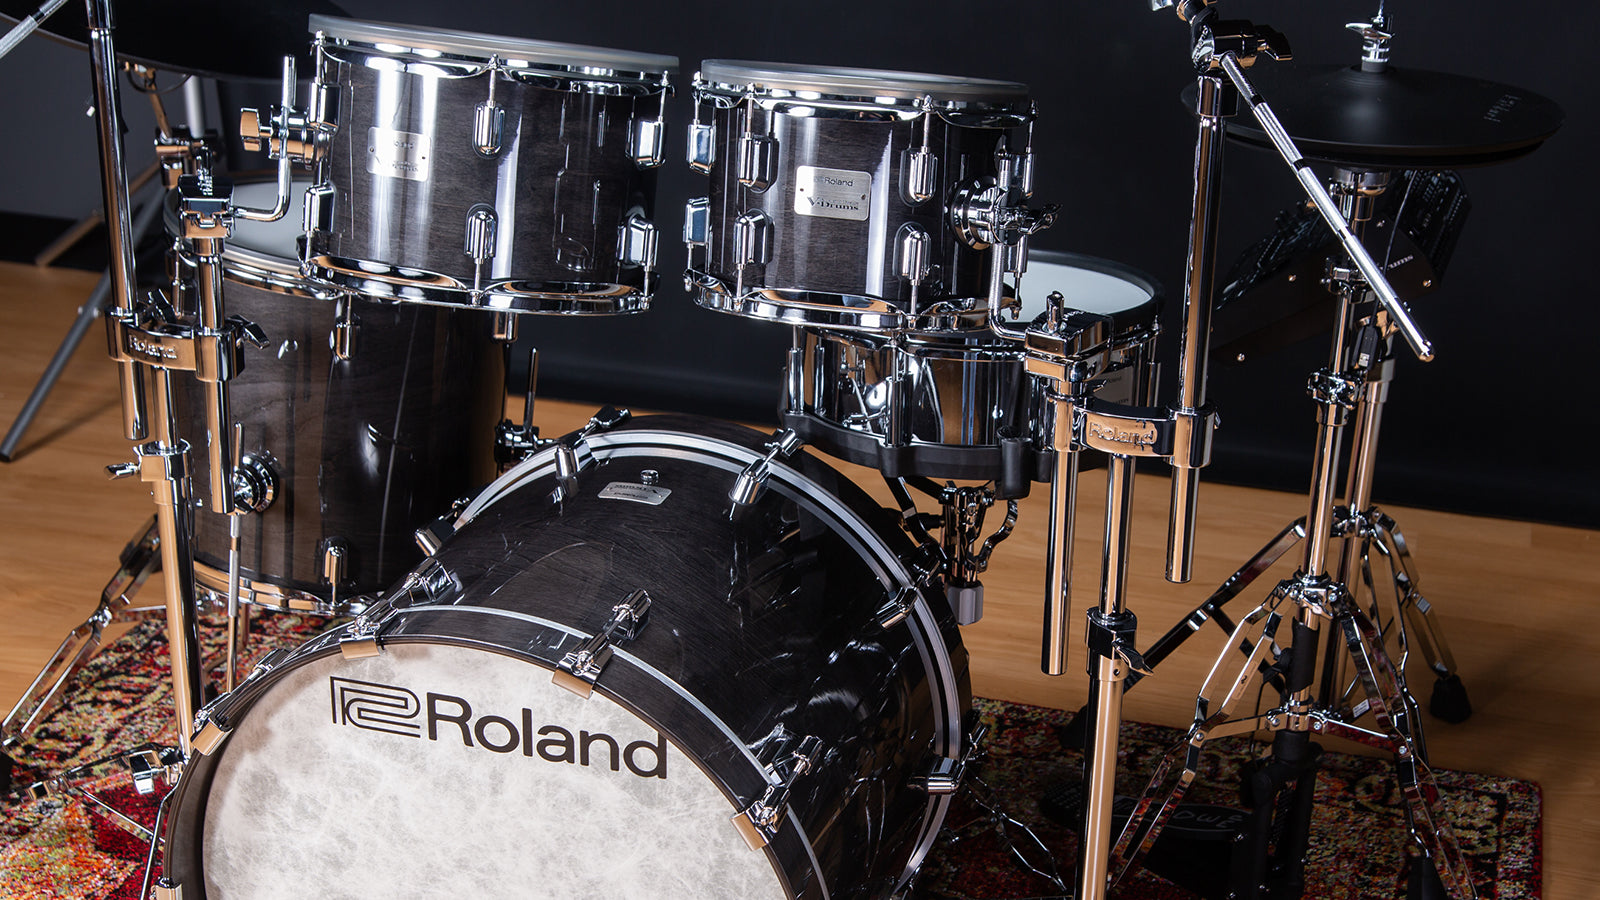 A Roland VAD706 drum set in a photo studio